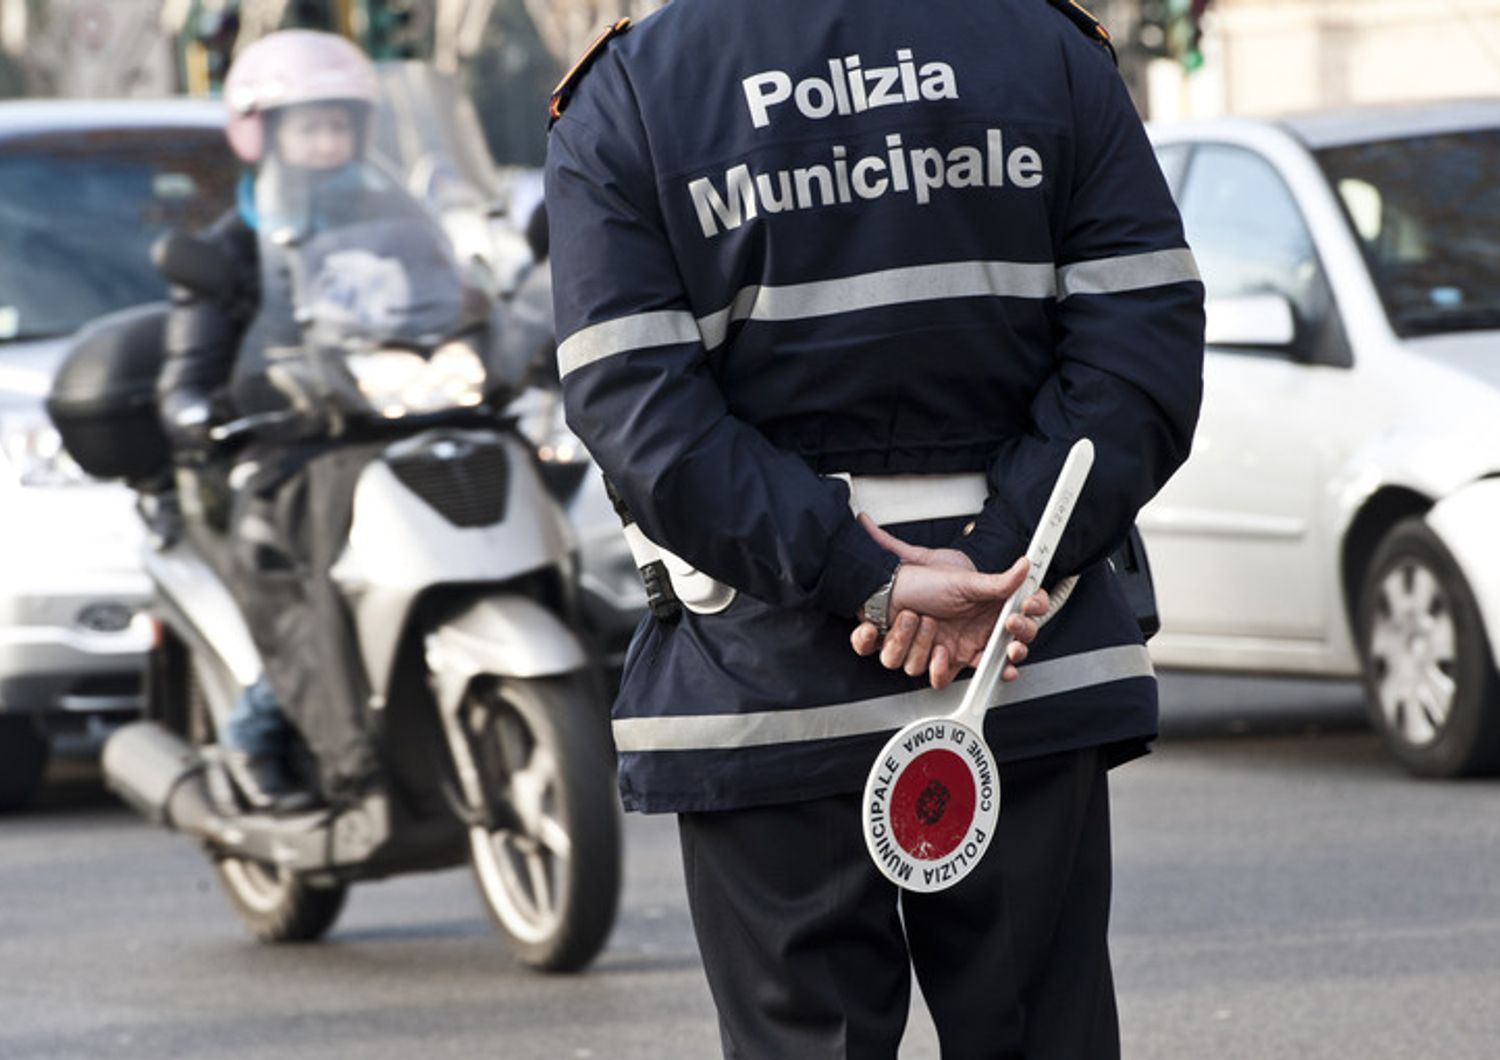 roma traffico vigili urbani polizia municipale (agf)